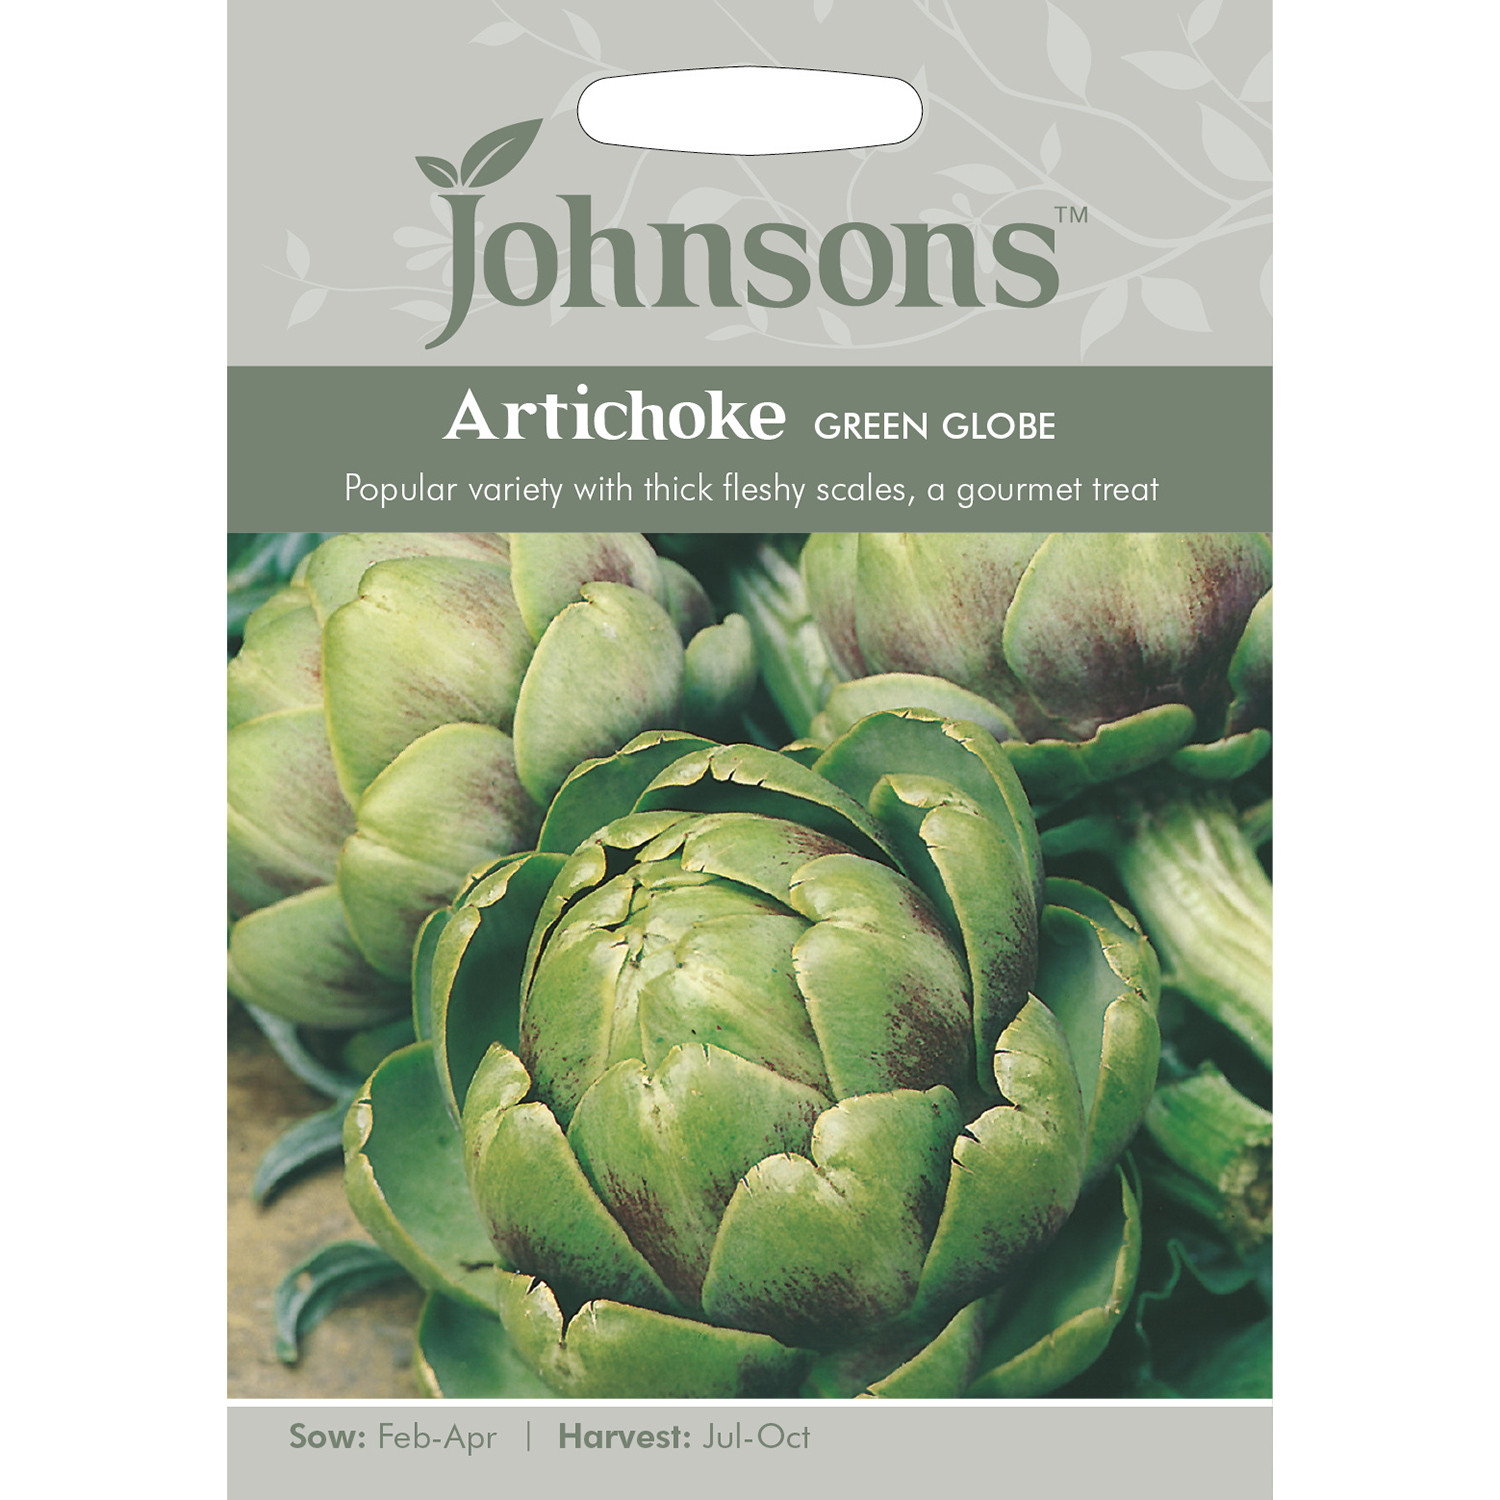 Johnsons Artichoke Green Globe Seeds Image 1